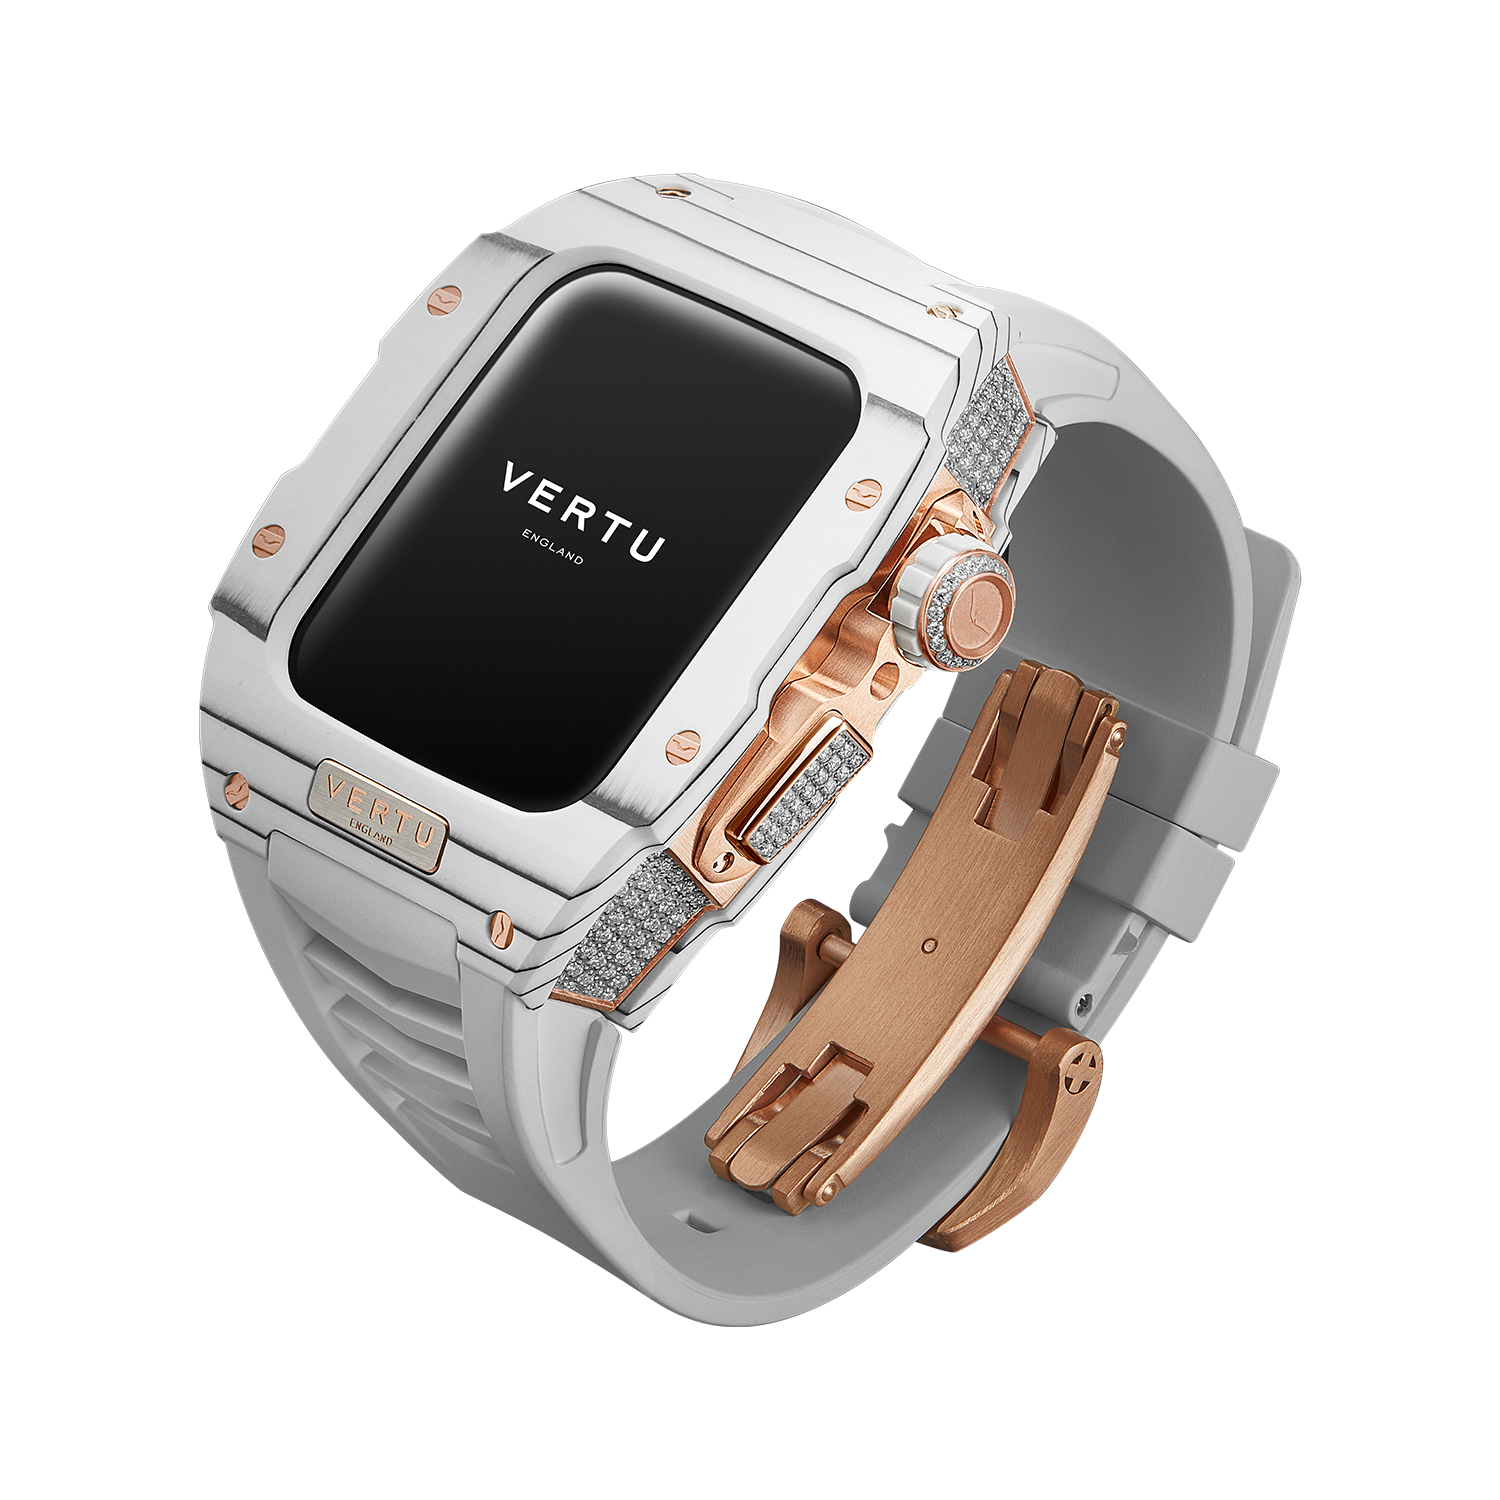 high-end smartwatch: white diamond VERTU smartwatch with white strap